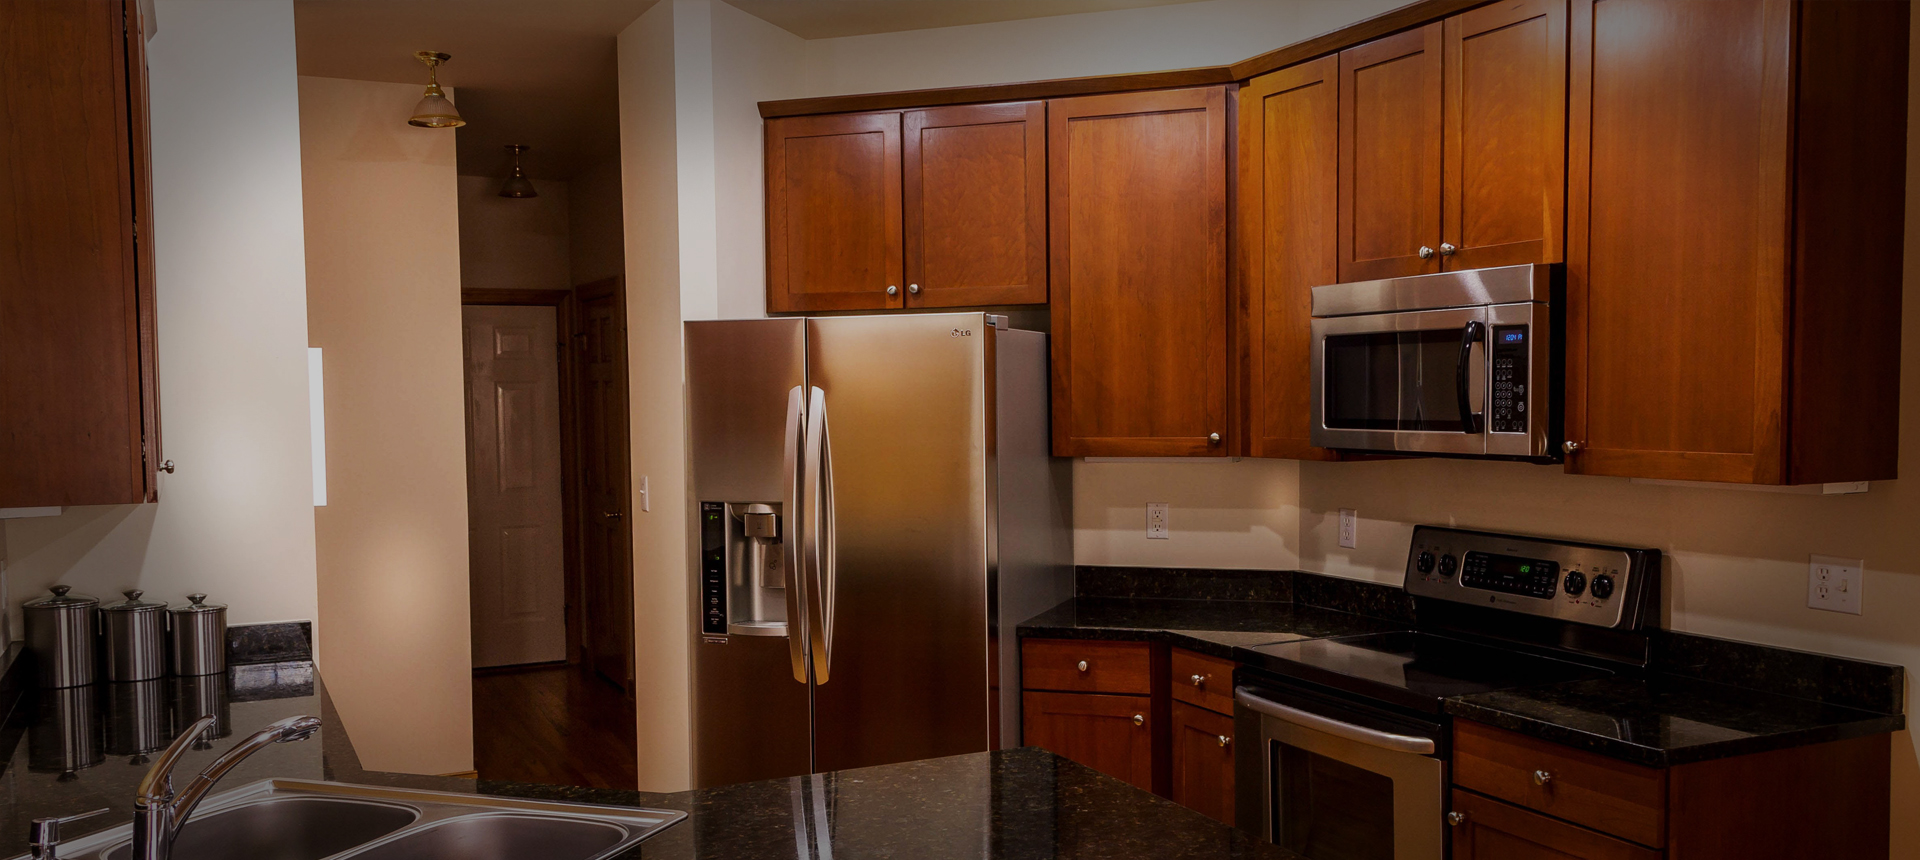 Cabinet Refacing Resurfacing Kitchen Remodeling Custom Closets